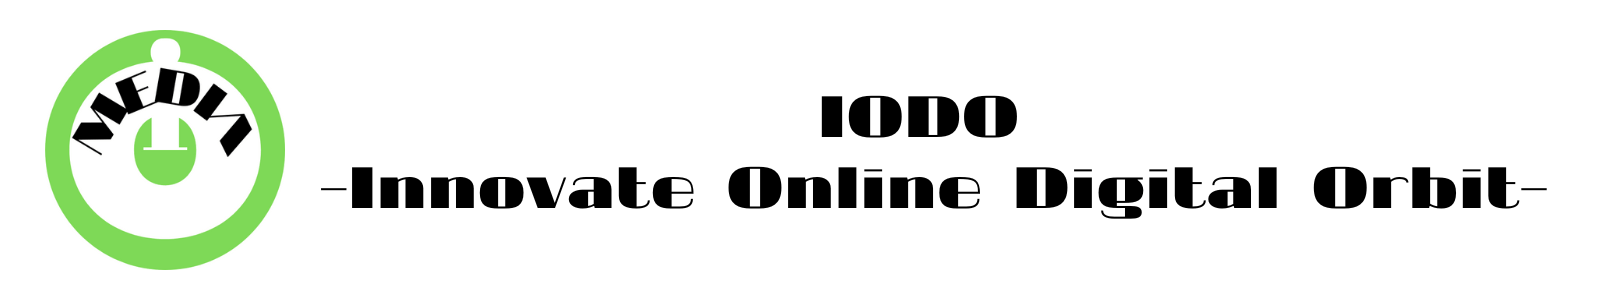 IODO -Innovate Online Digital Orbit-